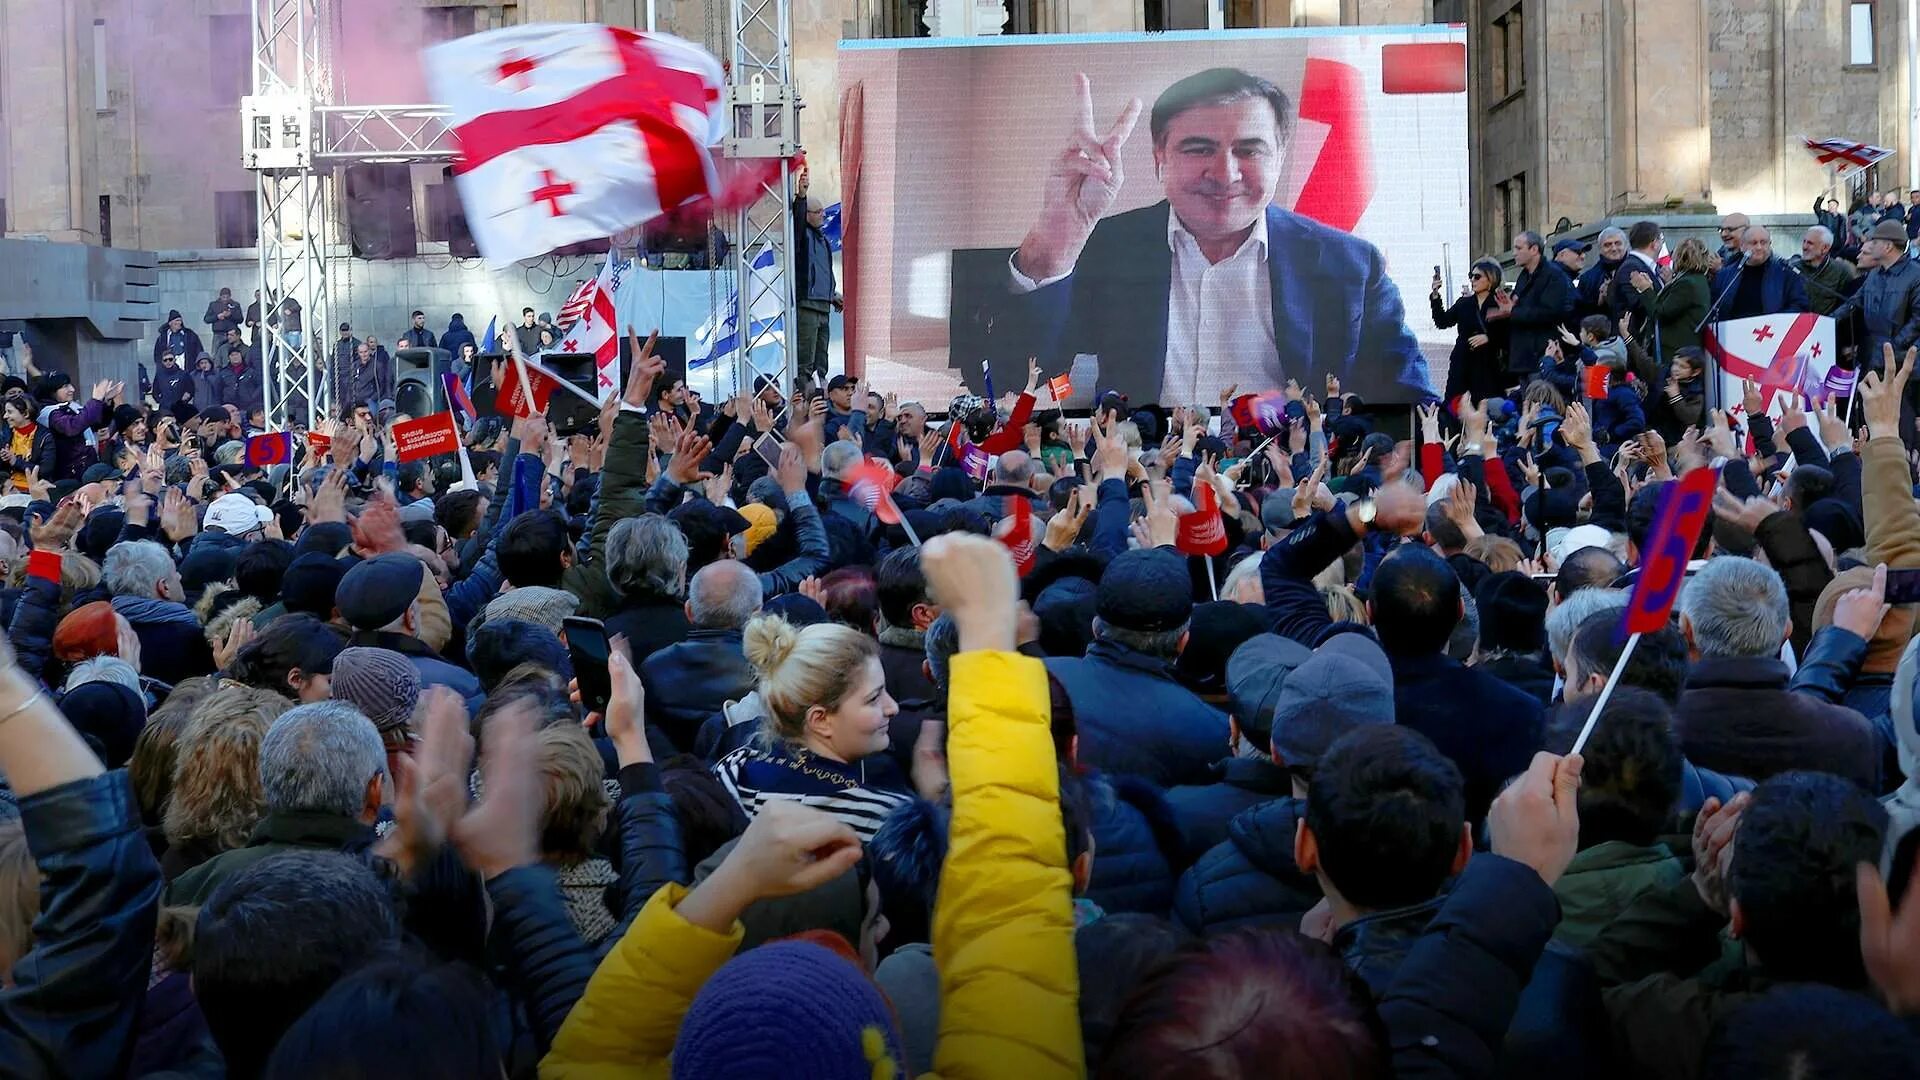 Ситуация в тбилиси сегодня. Митинг Саакашвили. Митинг в Тбилиси сегодня. Митинг Саакашвили Тбилиси. Оппозиция Грузии.